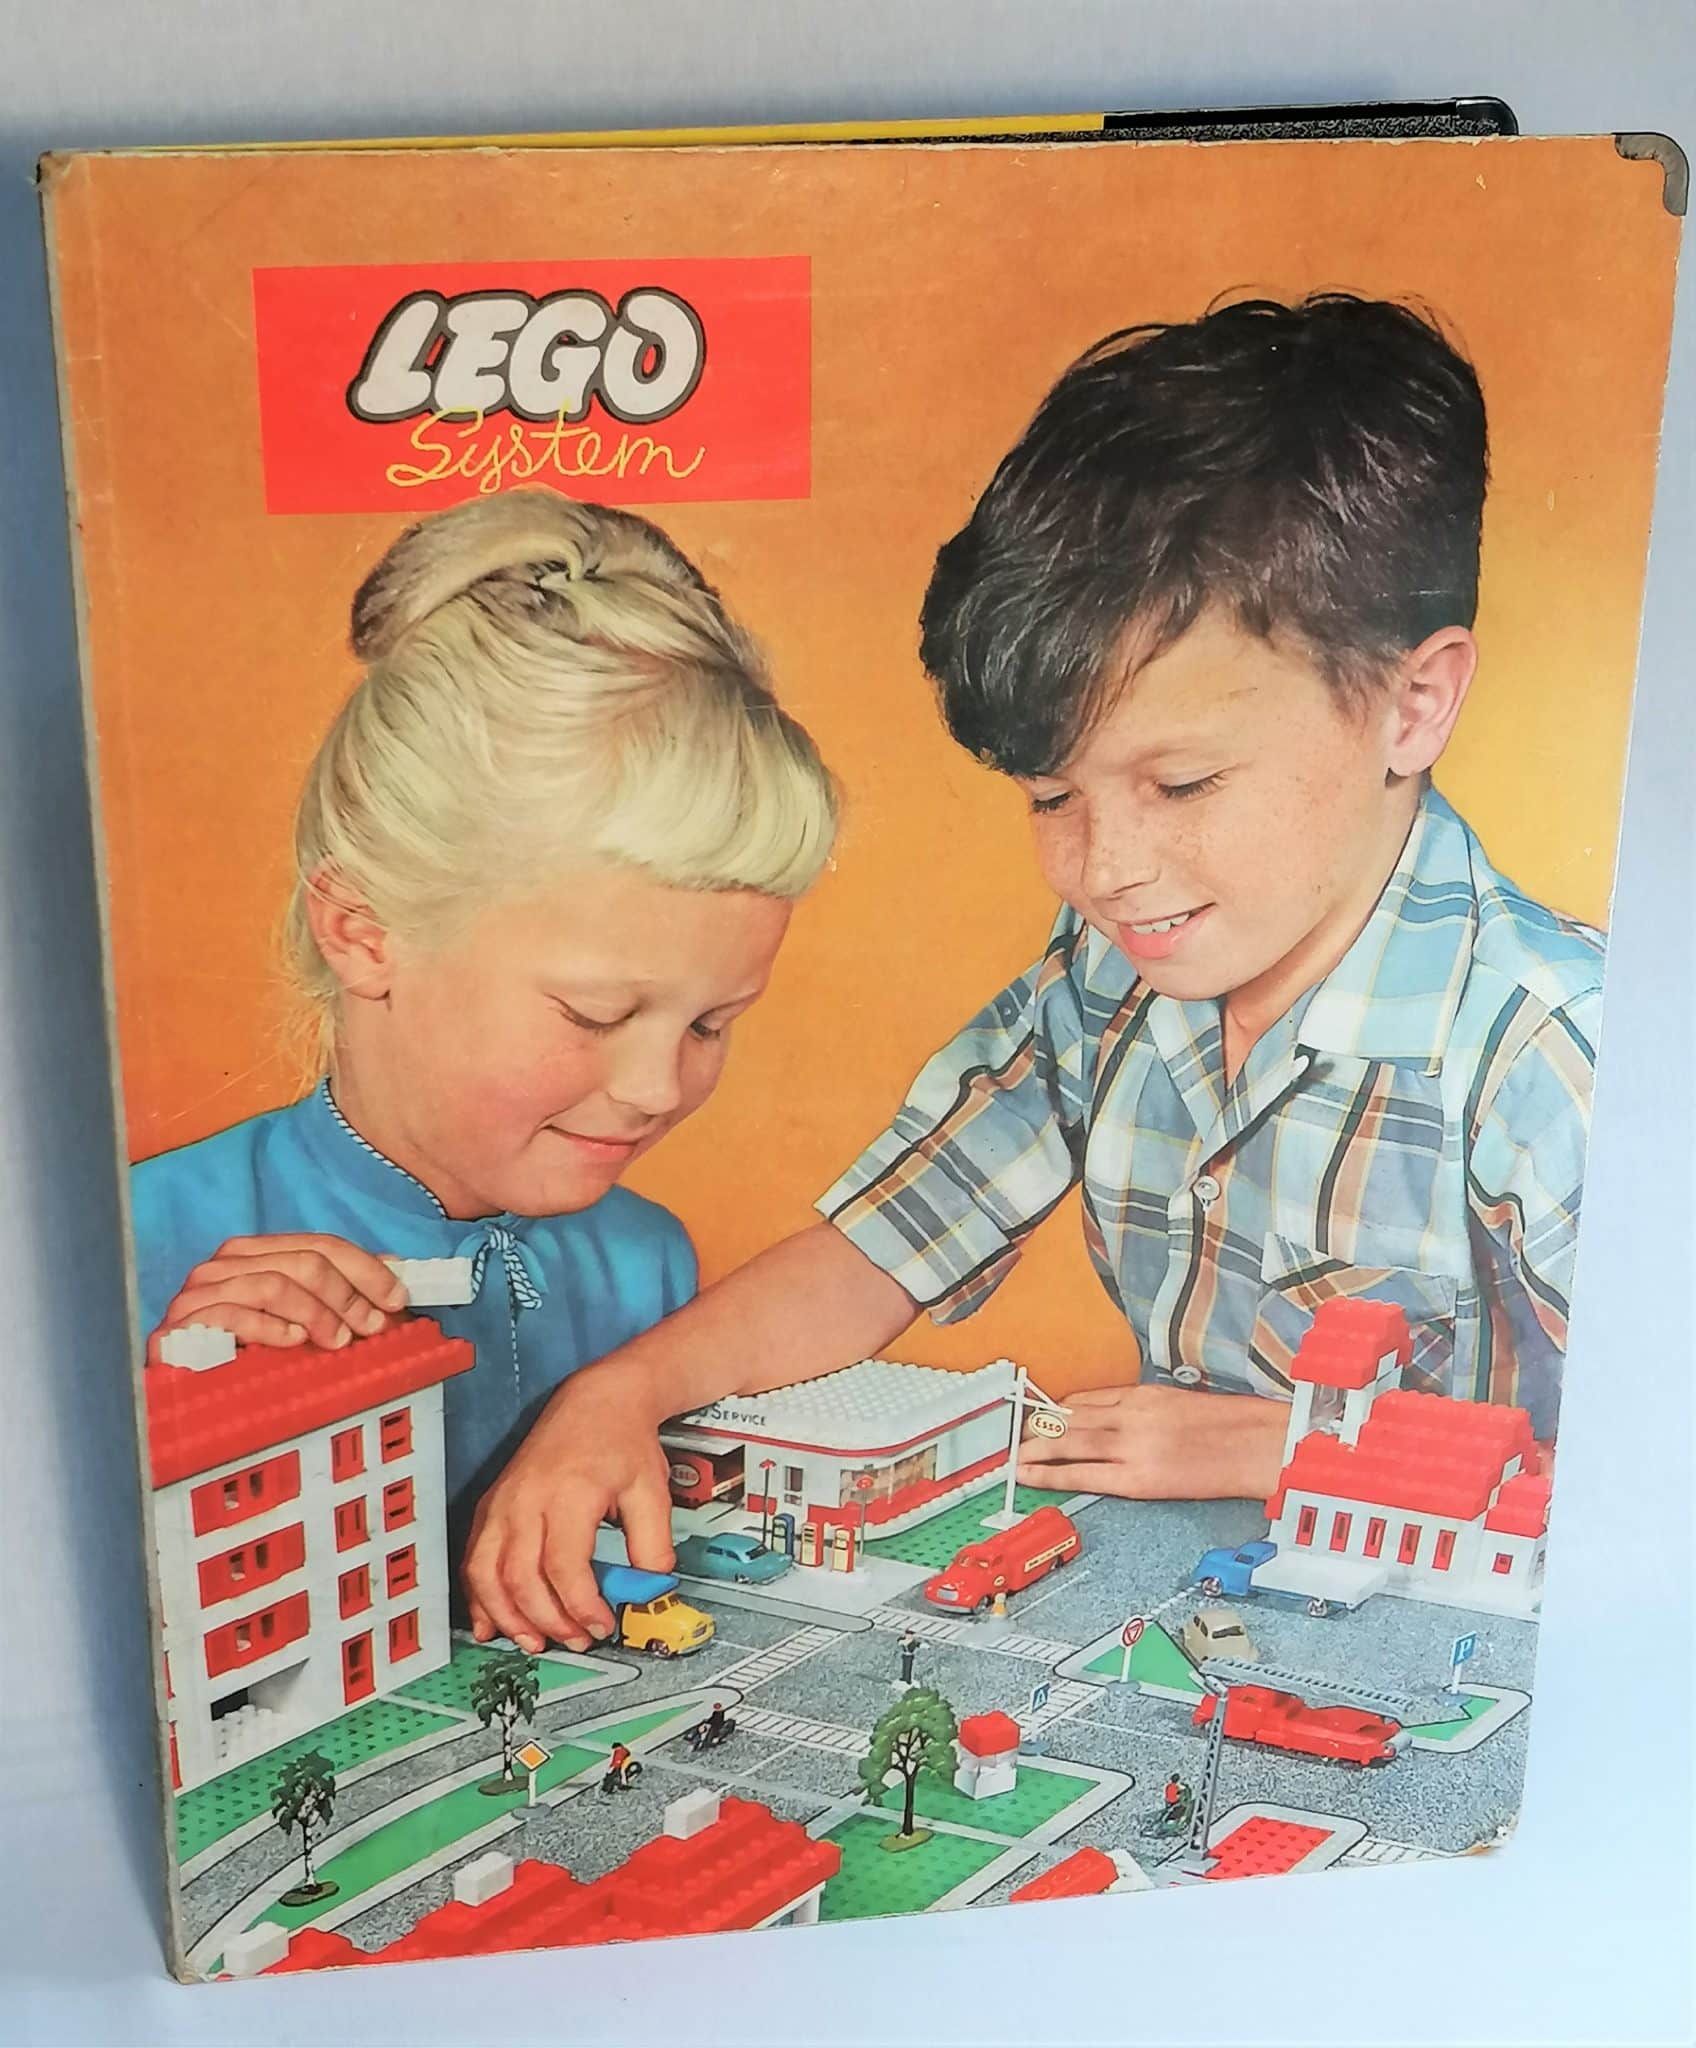 Plaque de base Lego System vintage - Grenier d'enfance